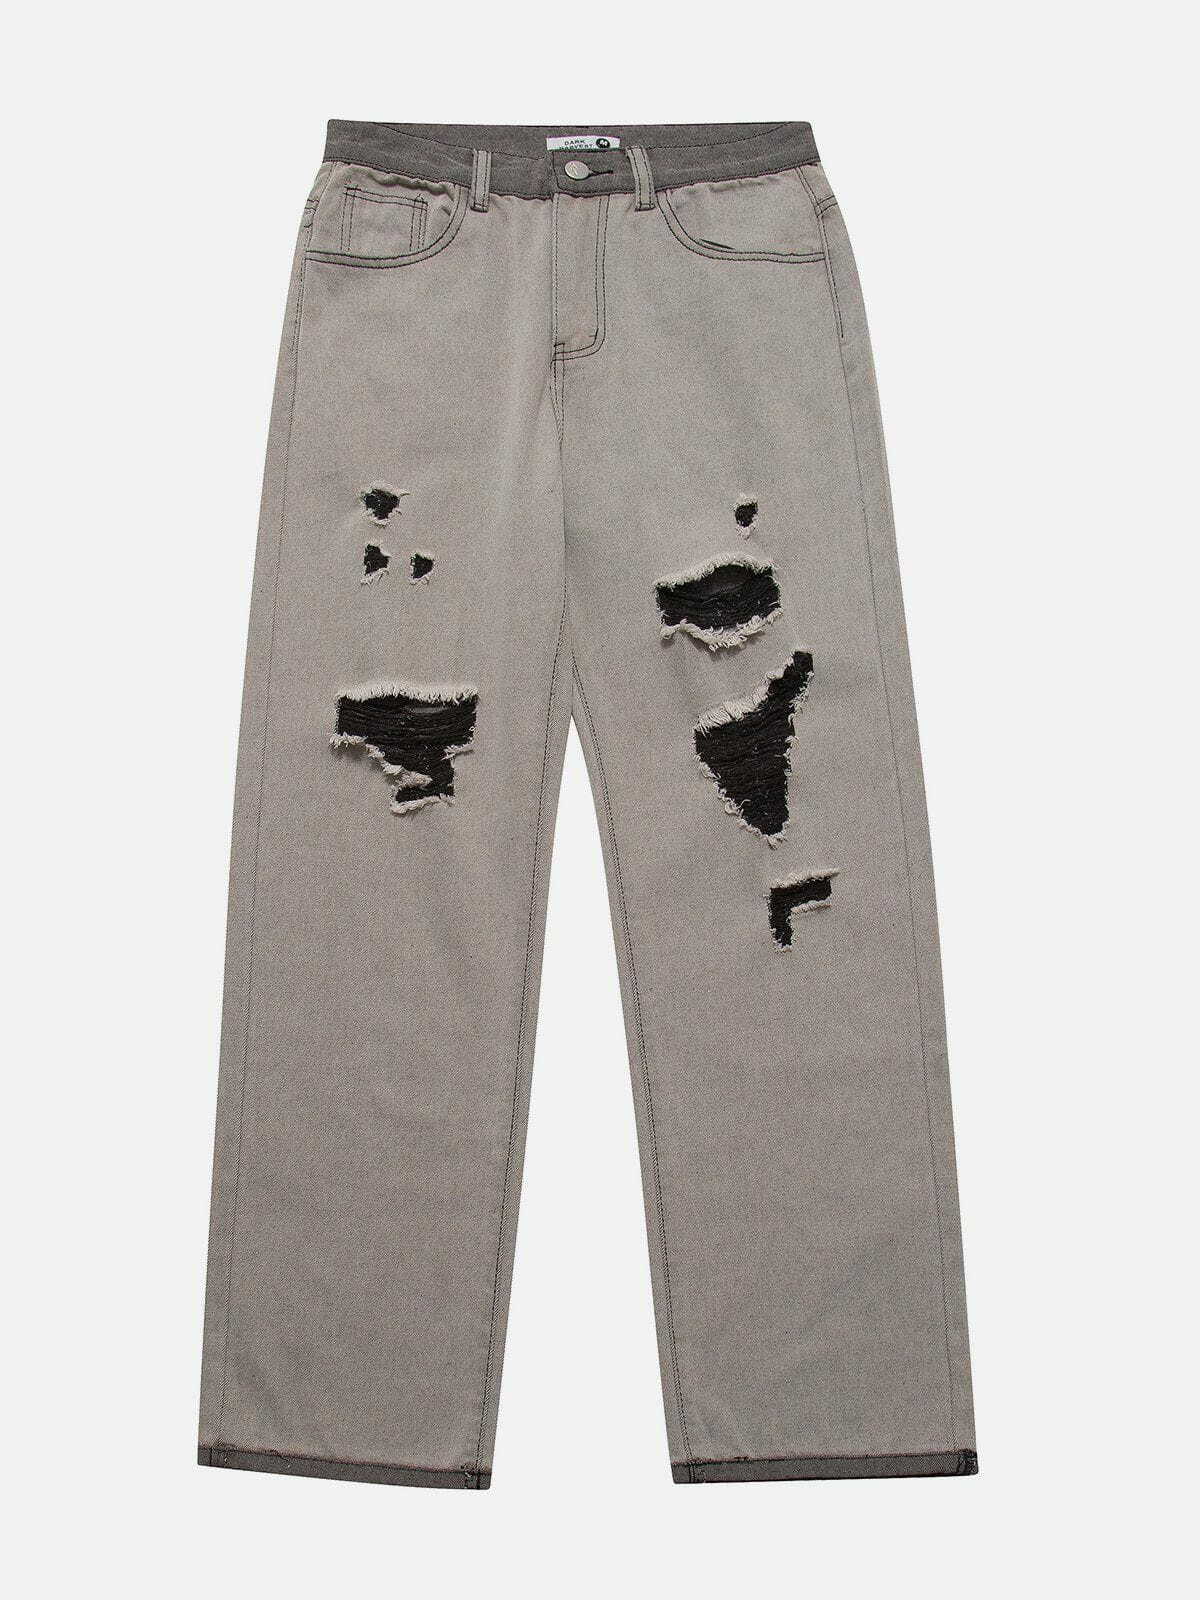 washed hole design jeans edgy & distinctive denim 4562